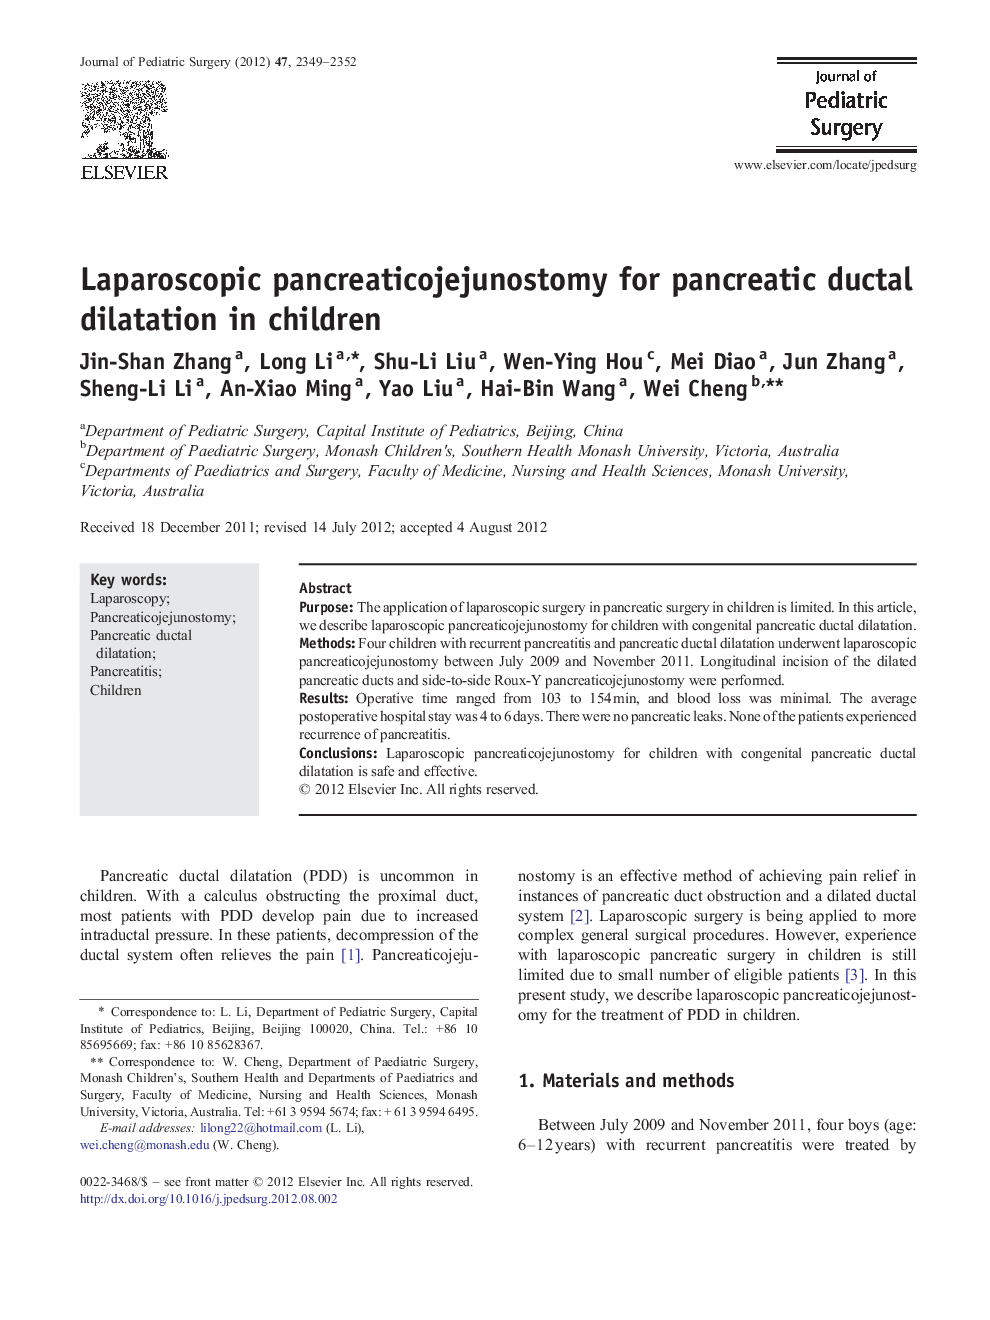 Laparoscopic pancreaticojejunostomy for pancreatic ductal dilatation in children